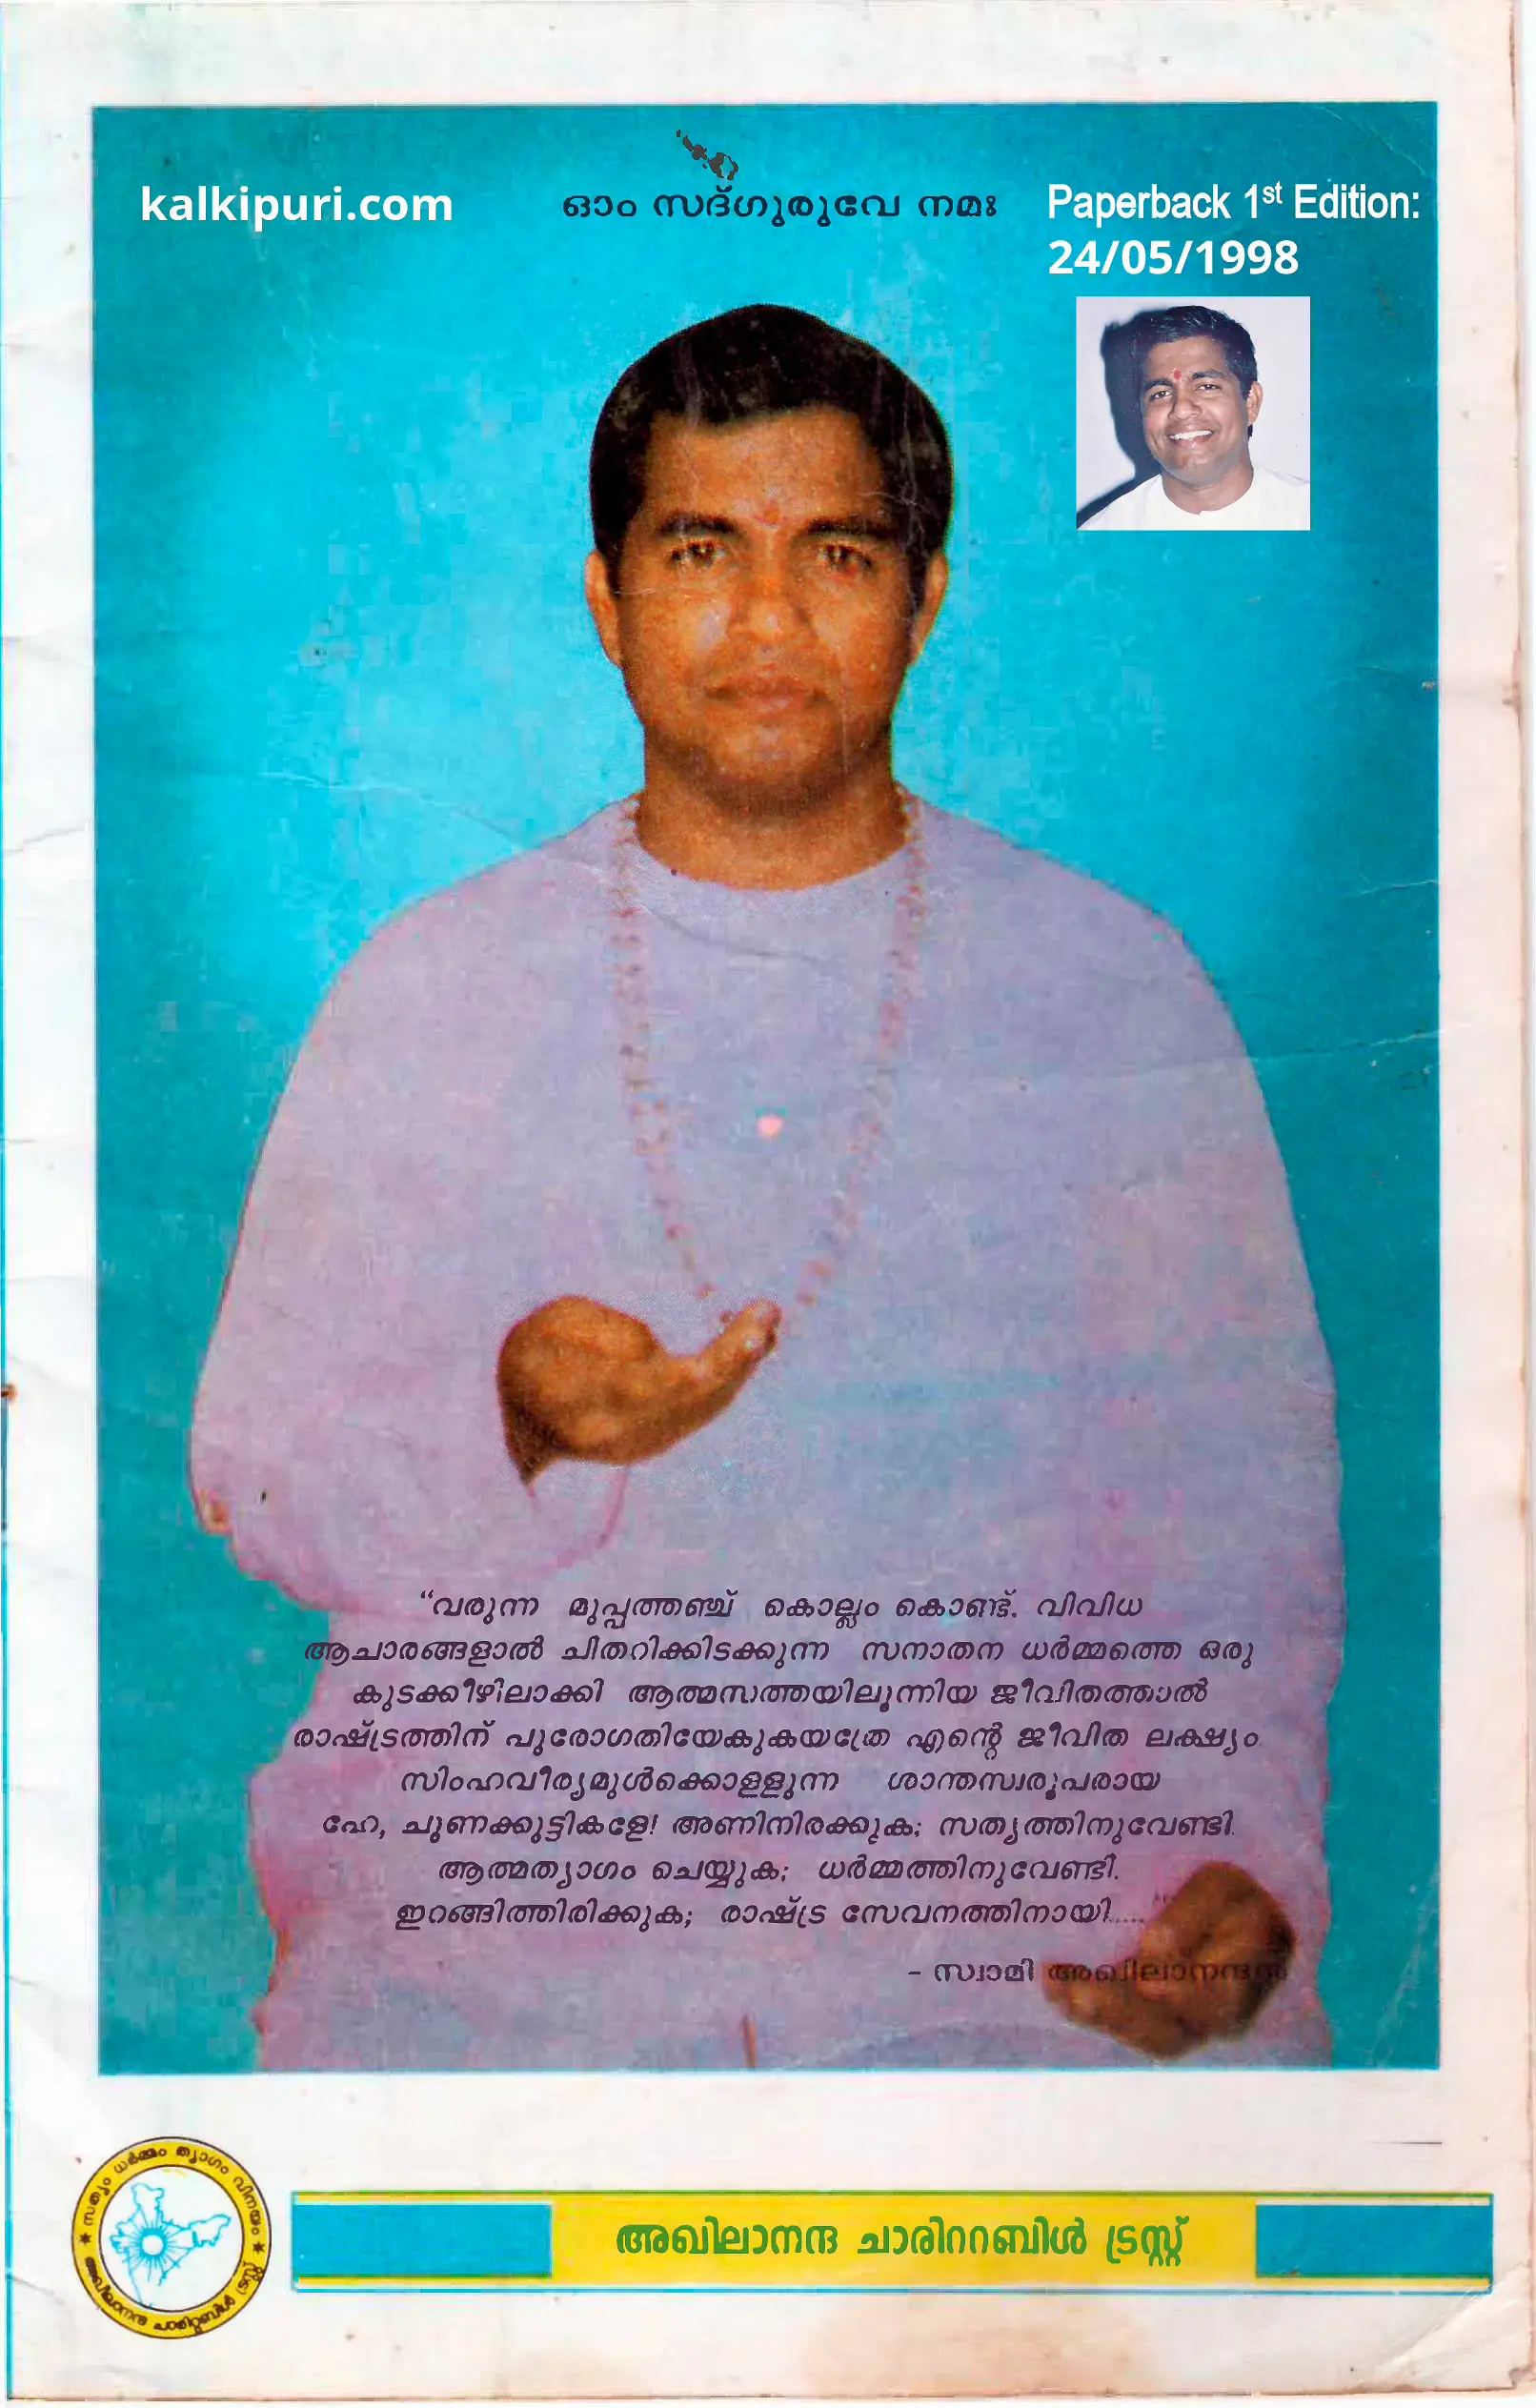 The Book "Bharatham ParamVaibhavaththilekku" in Malayalam by Akhilananda Swamy (previous name of Kalki) was published on 24 May 1998.